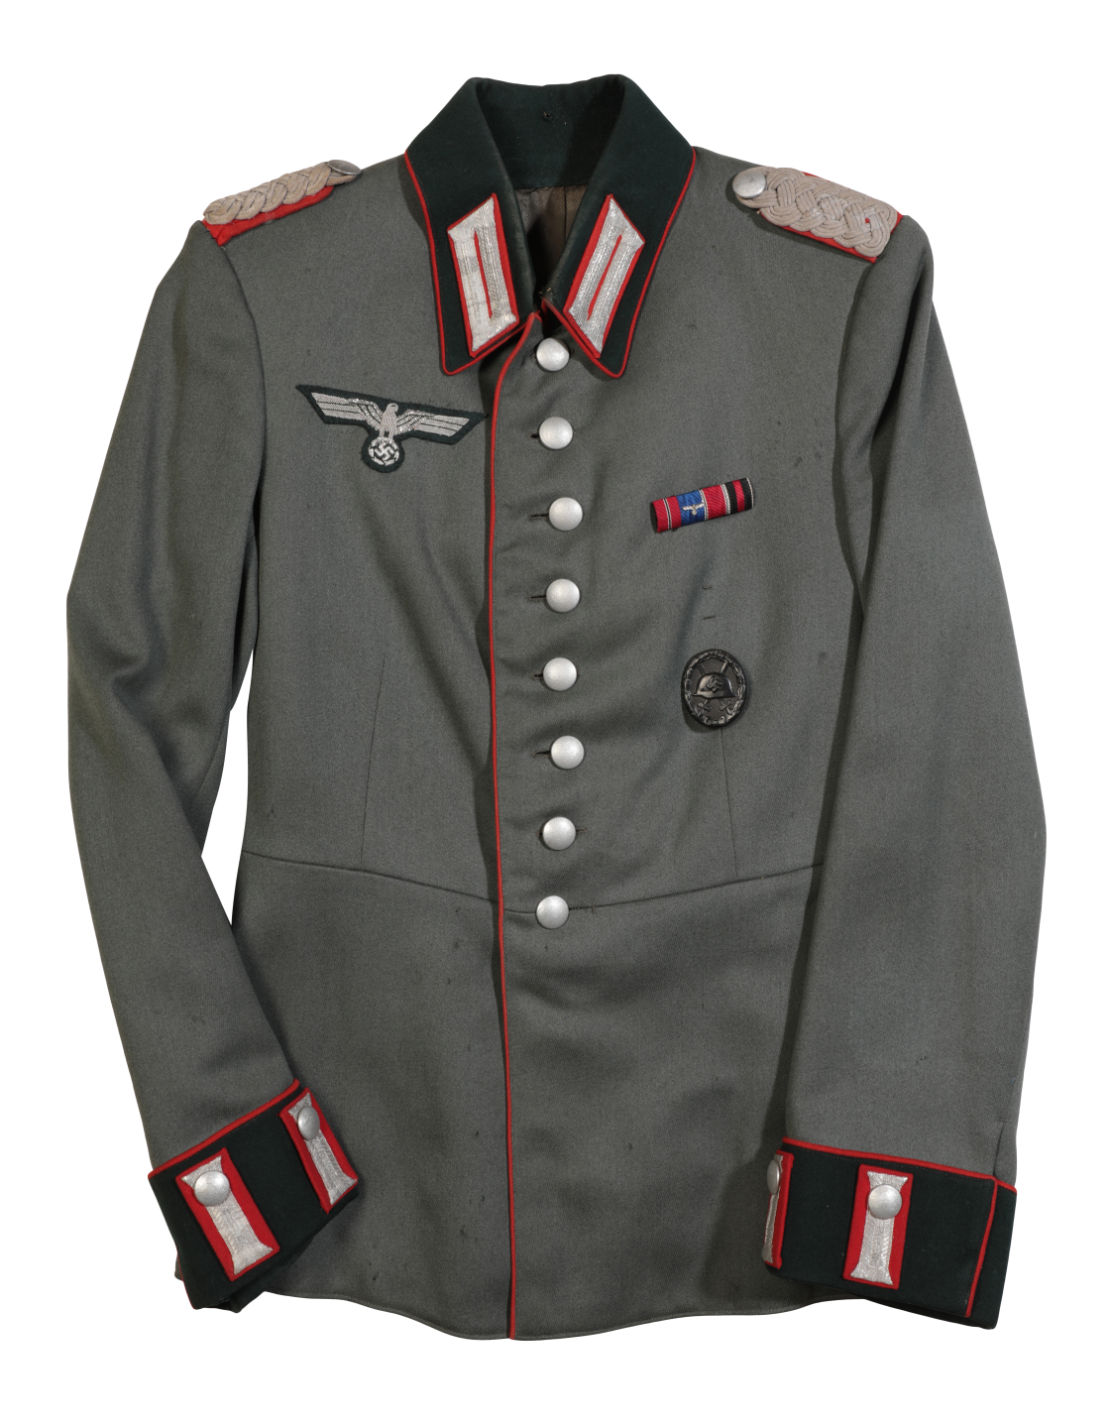 A WWII GERMAN ARTILLERY OFFICERS 3adec6